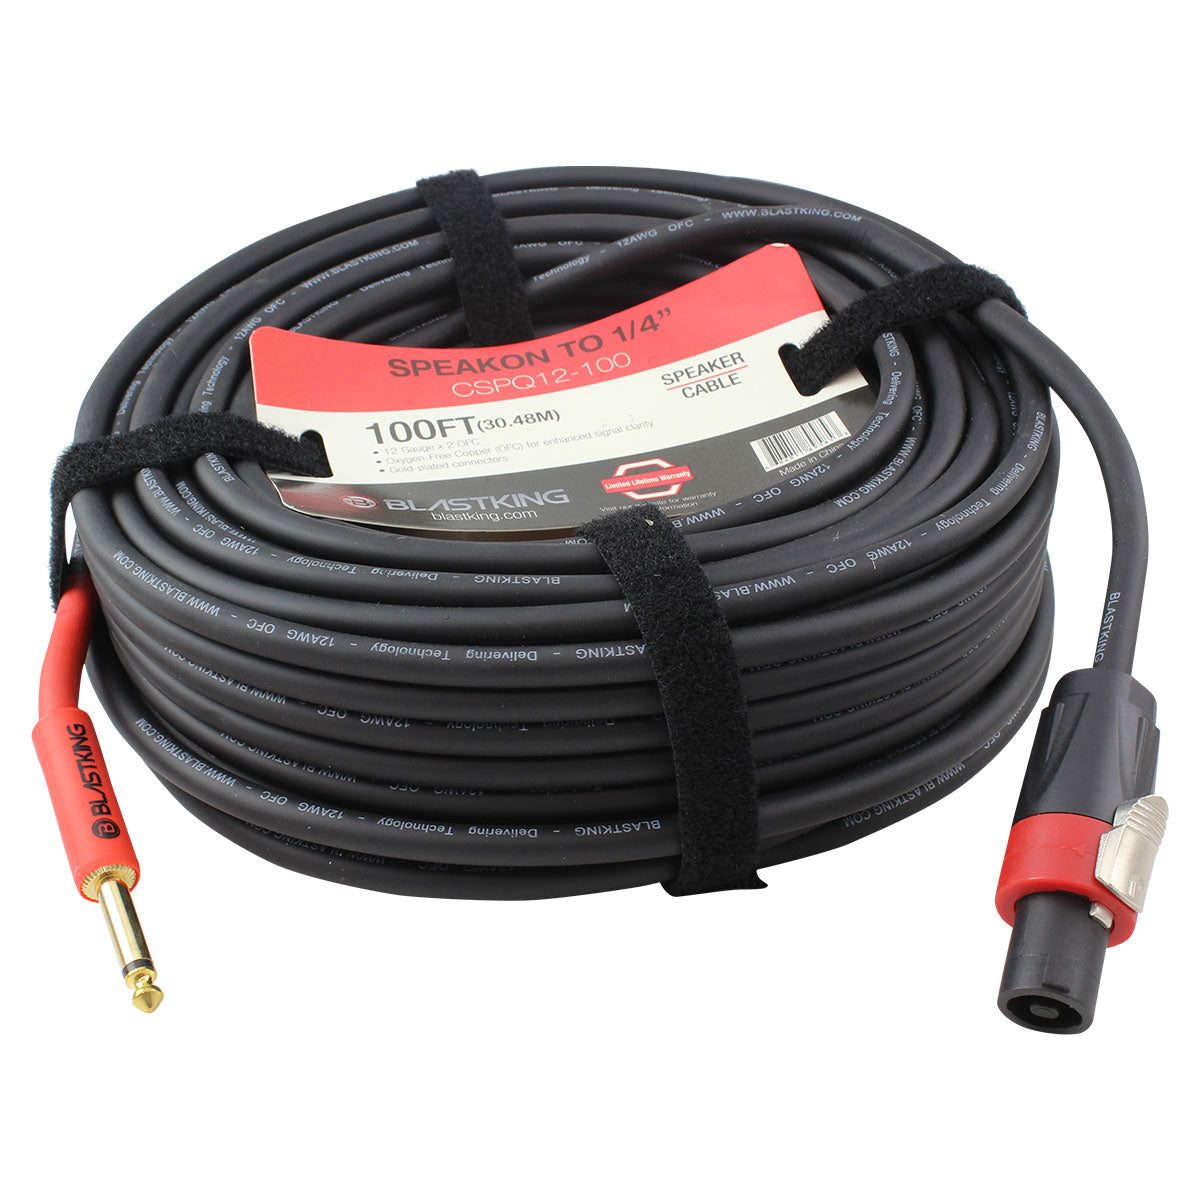 Blastking CSPQ12-100 Speakon to 1/4" Cable 100 Ft